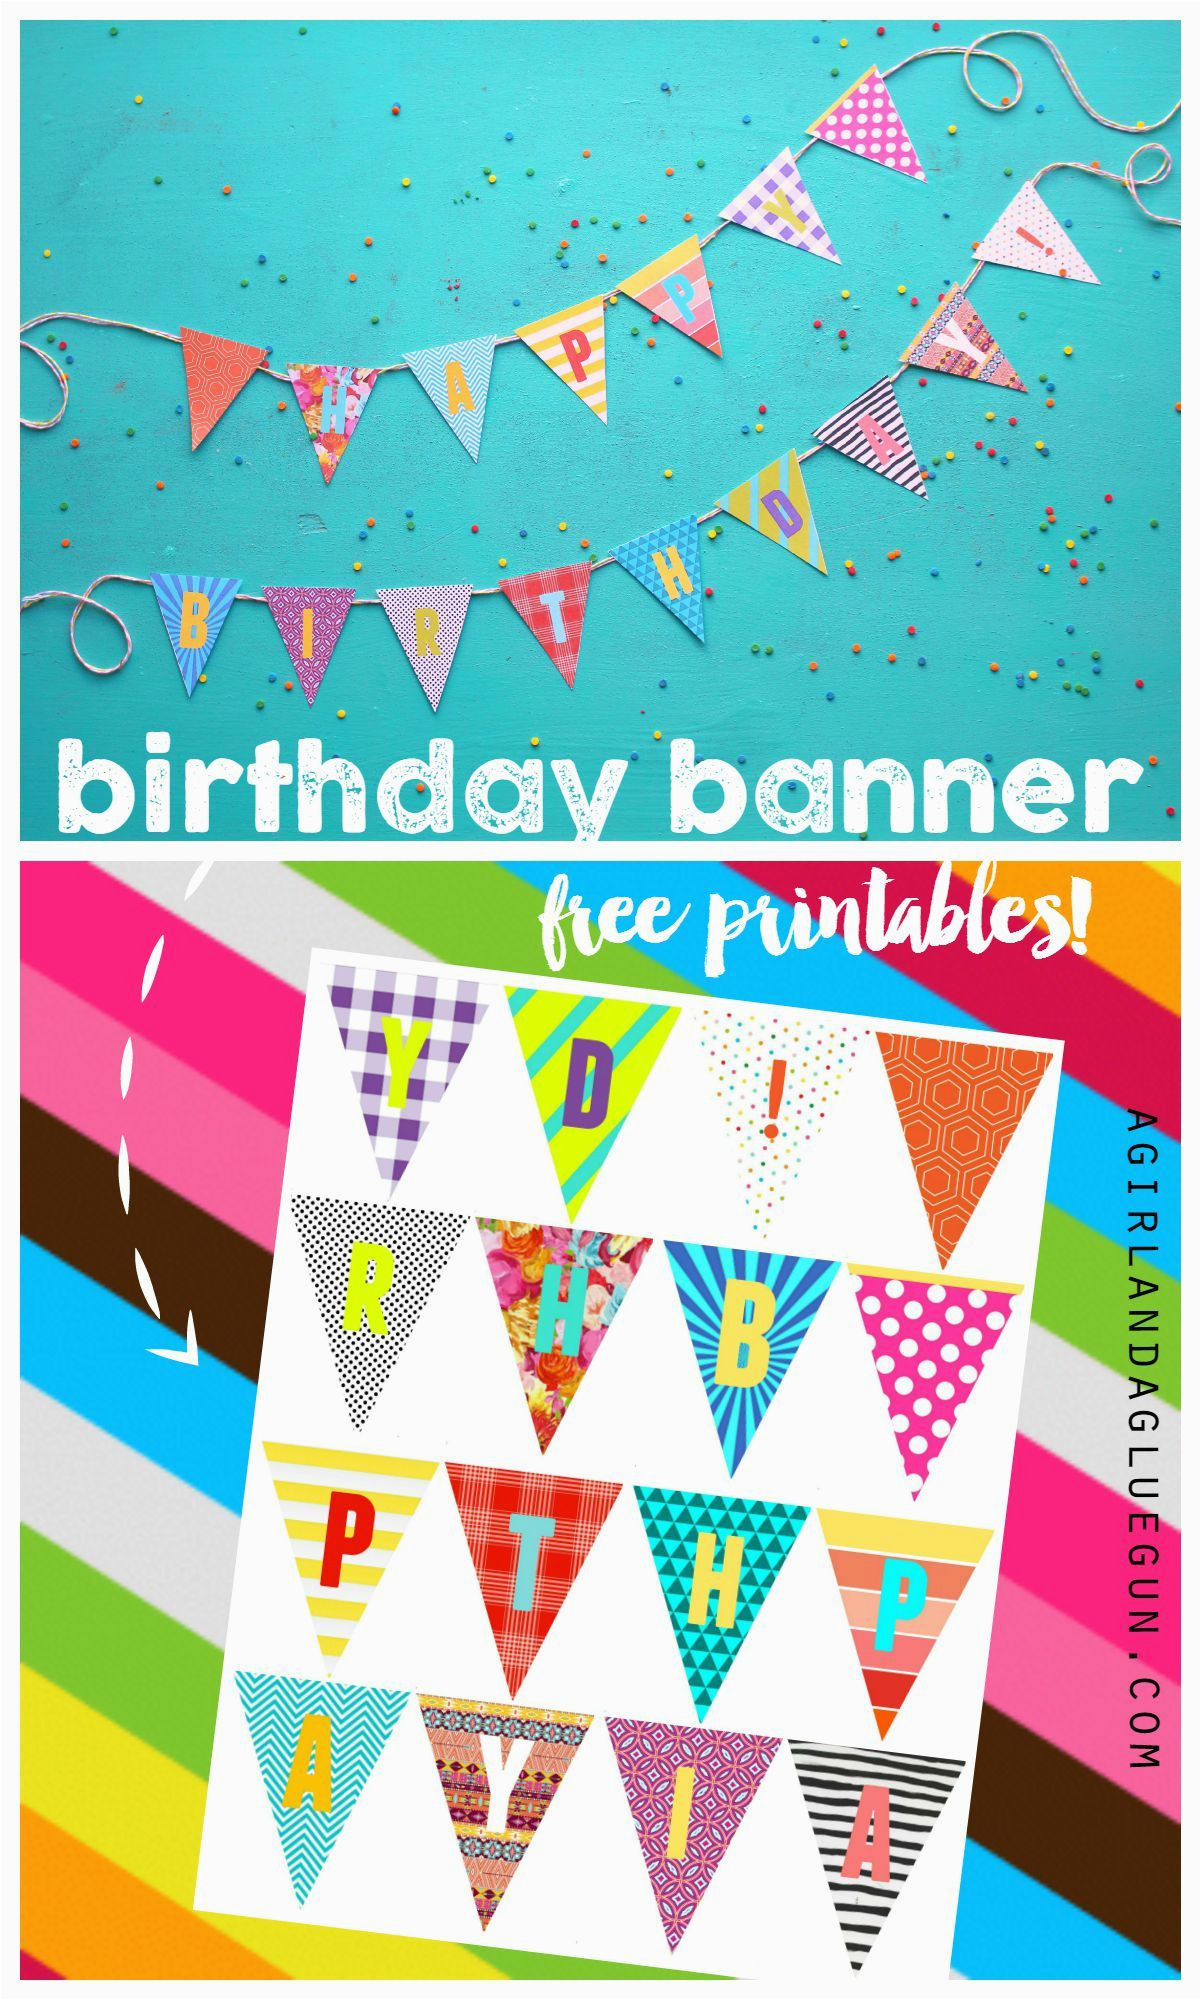 happy-birthday-banners-to-print-off-birthdaybuzz